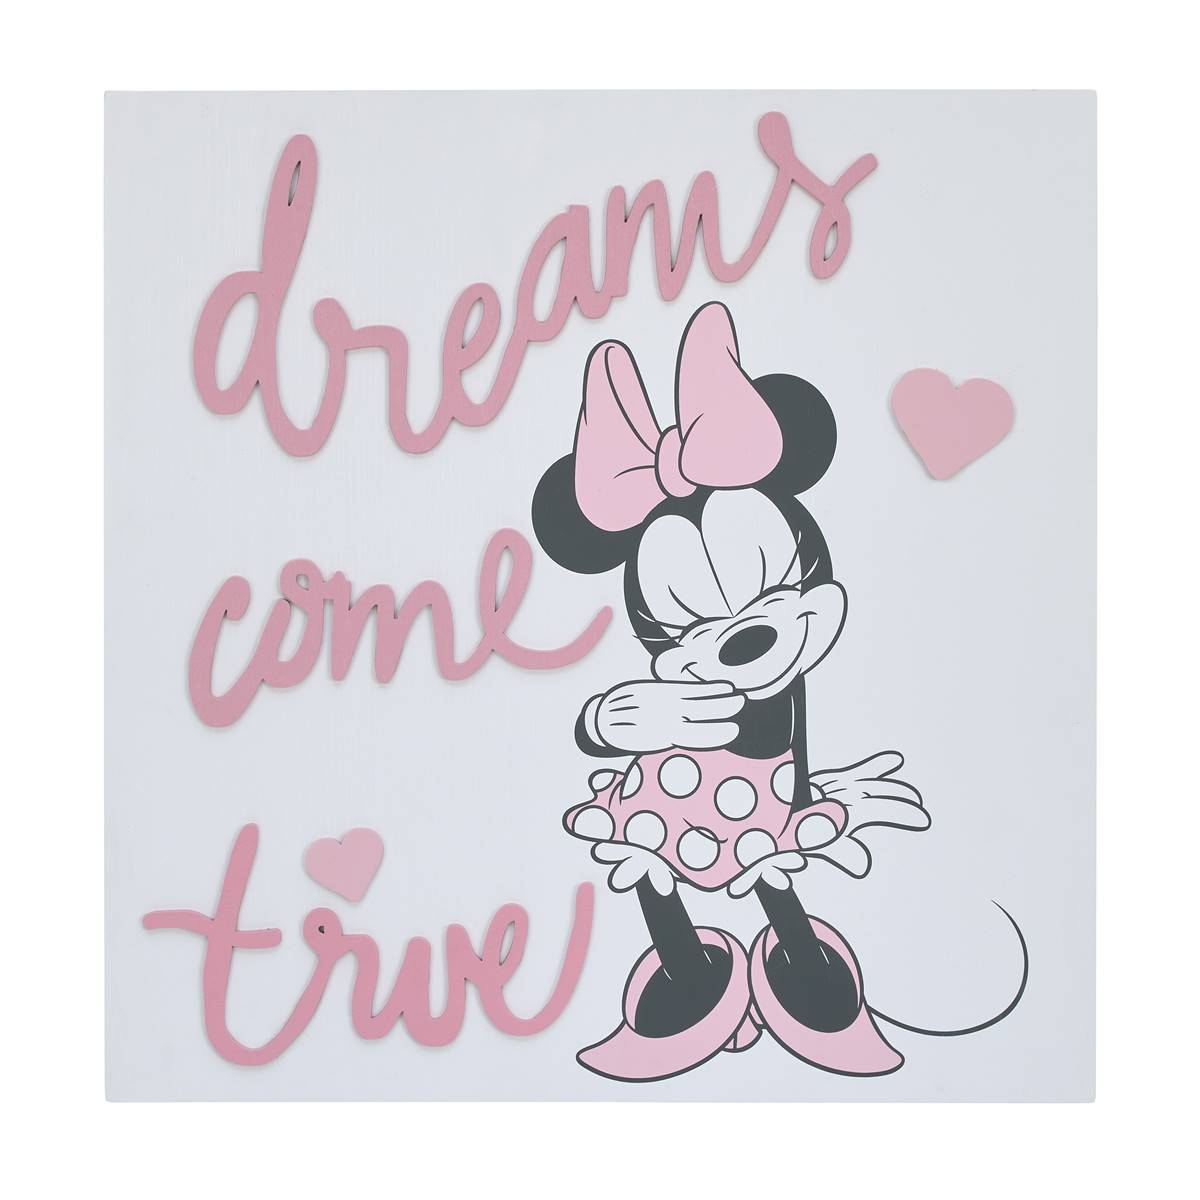 Disney Minnie Dreams Come True Wall Decor